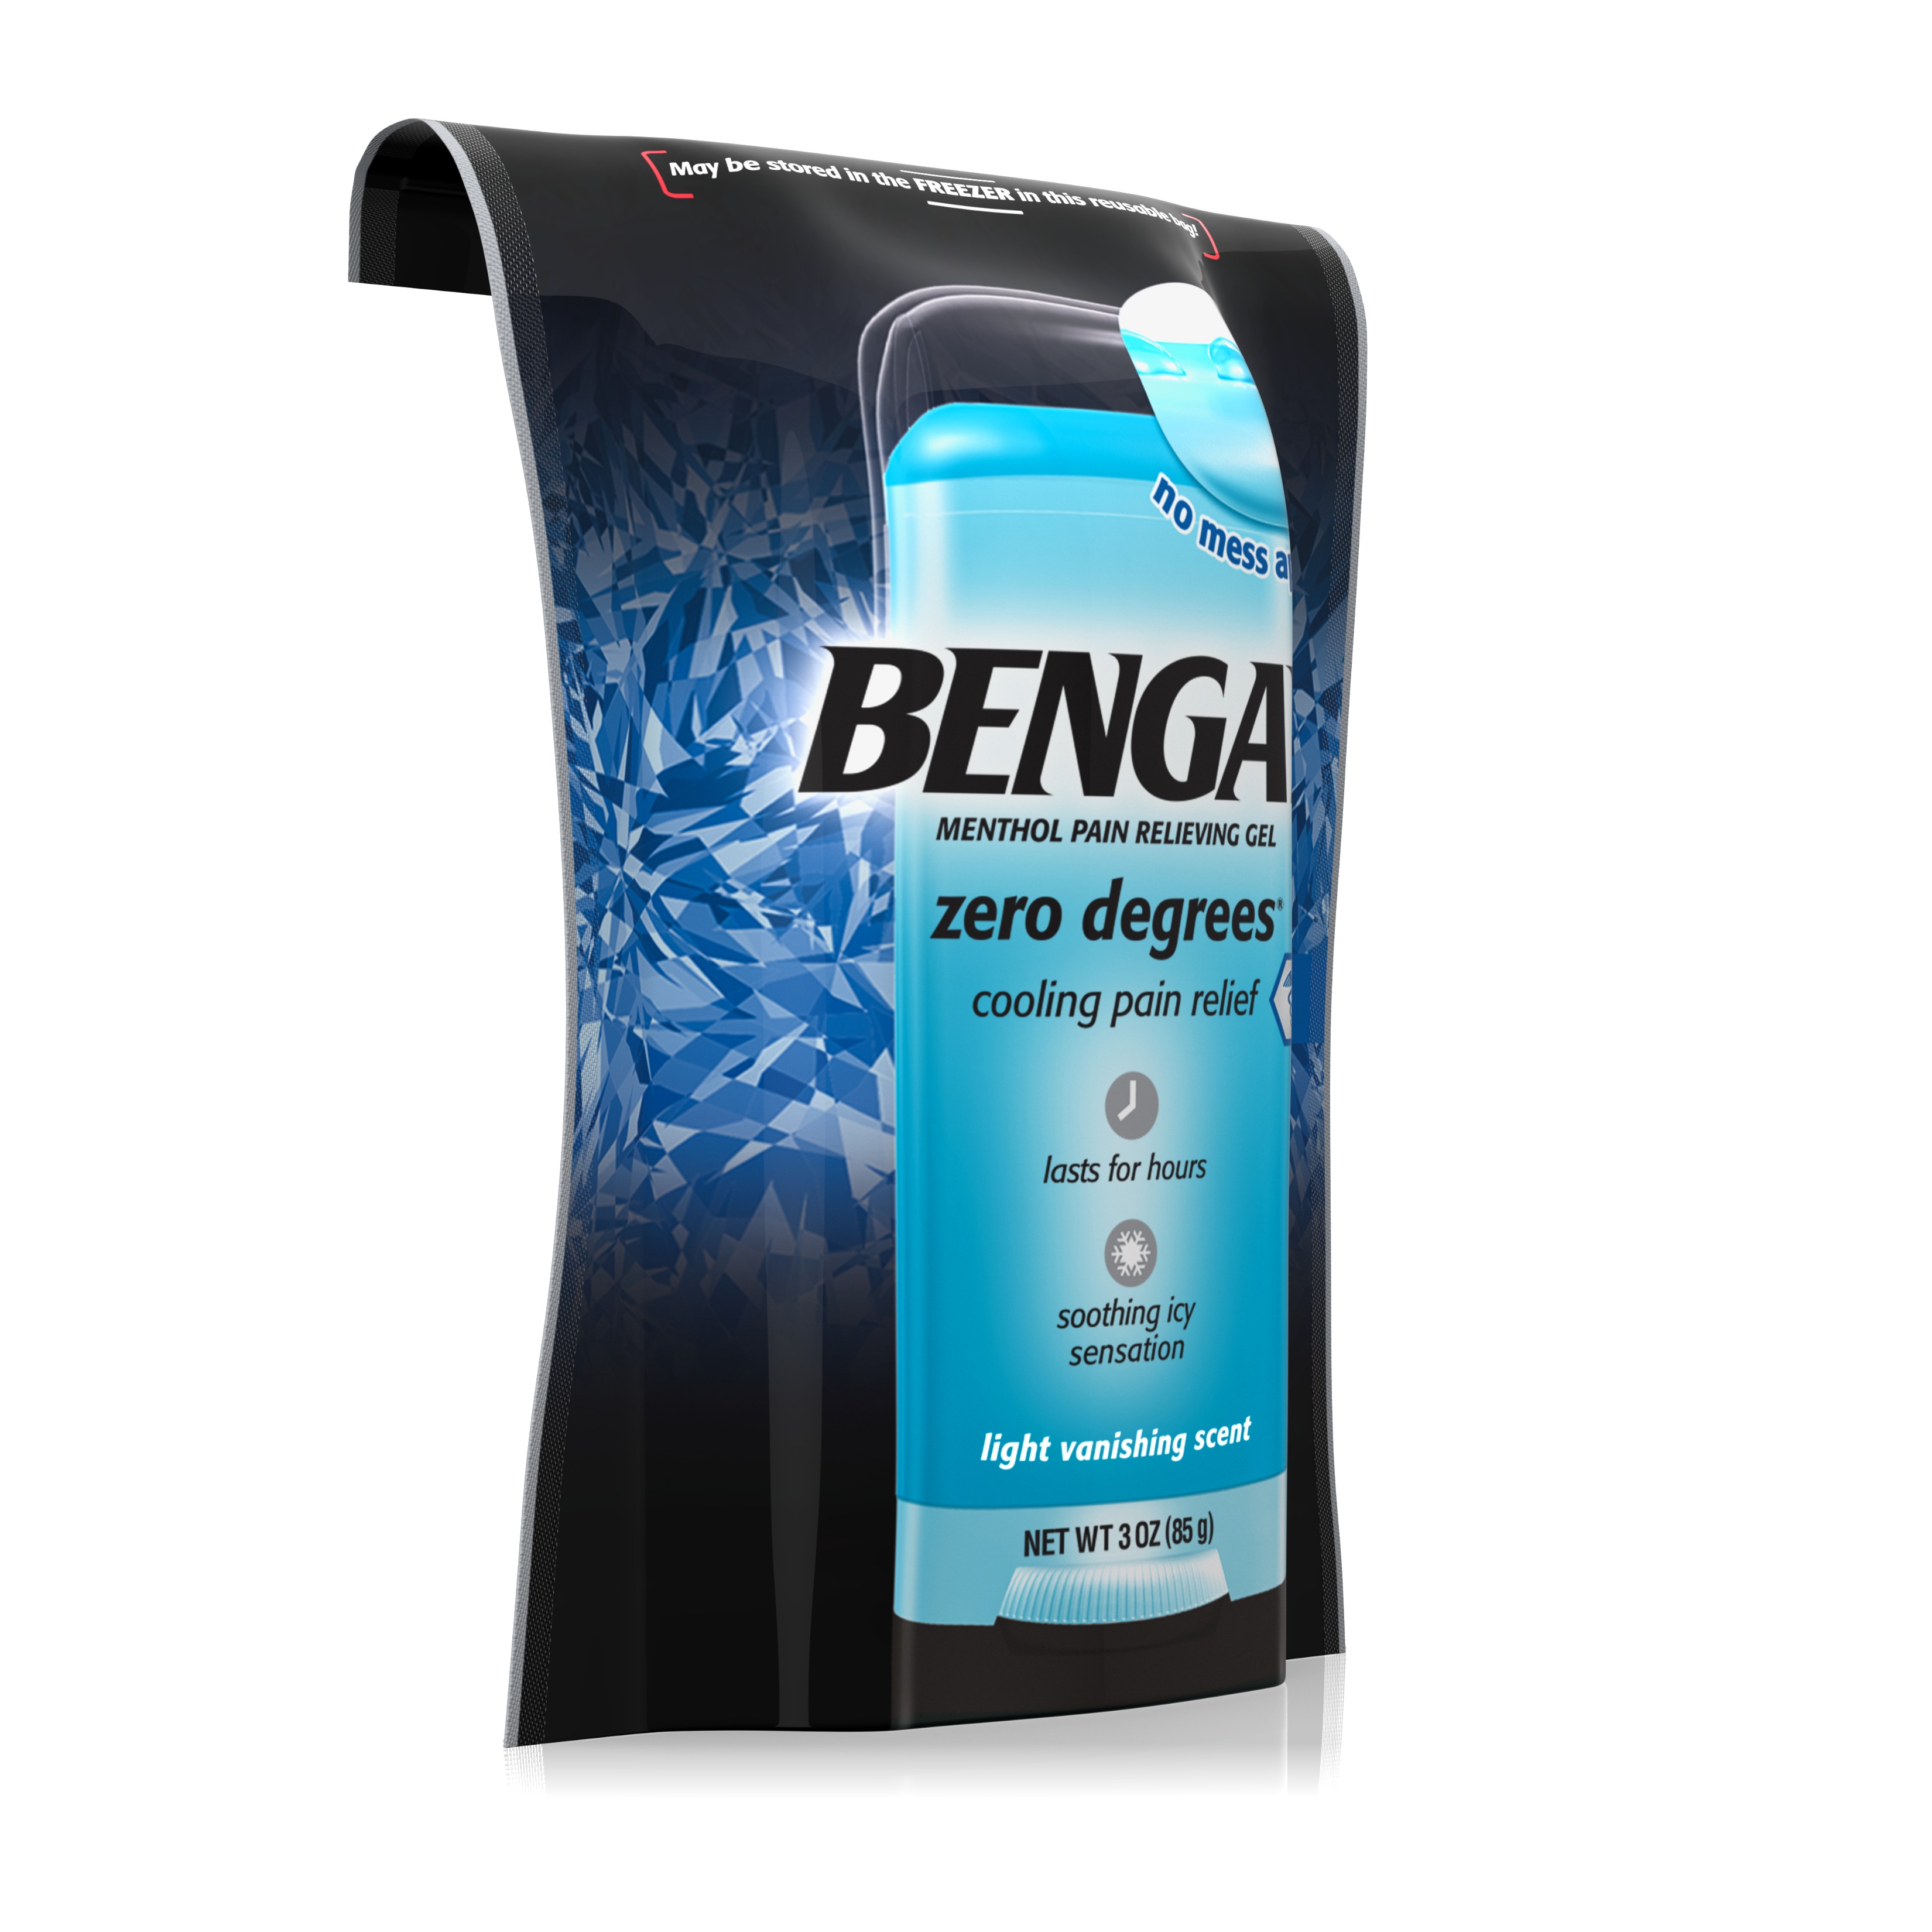 Bengay Zero Degrees Vanishing Scent Menthol Pain Relieving Gel, 3 Oz - image 2 of 6